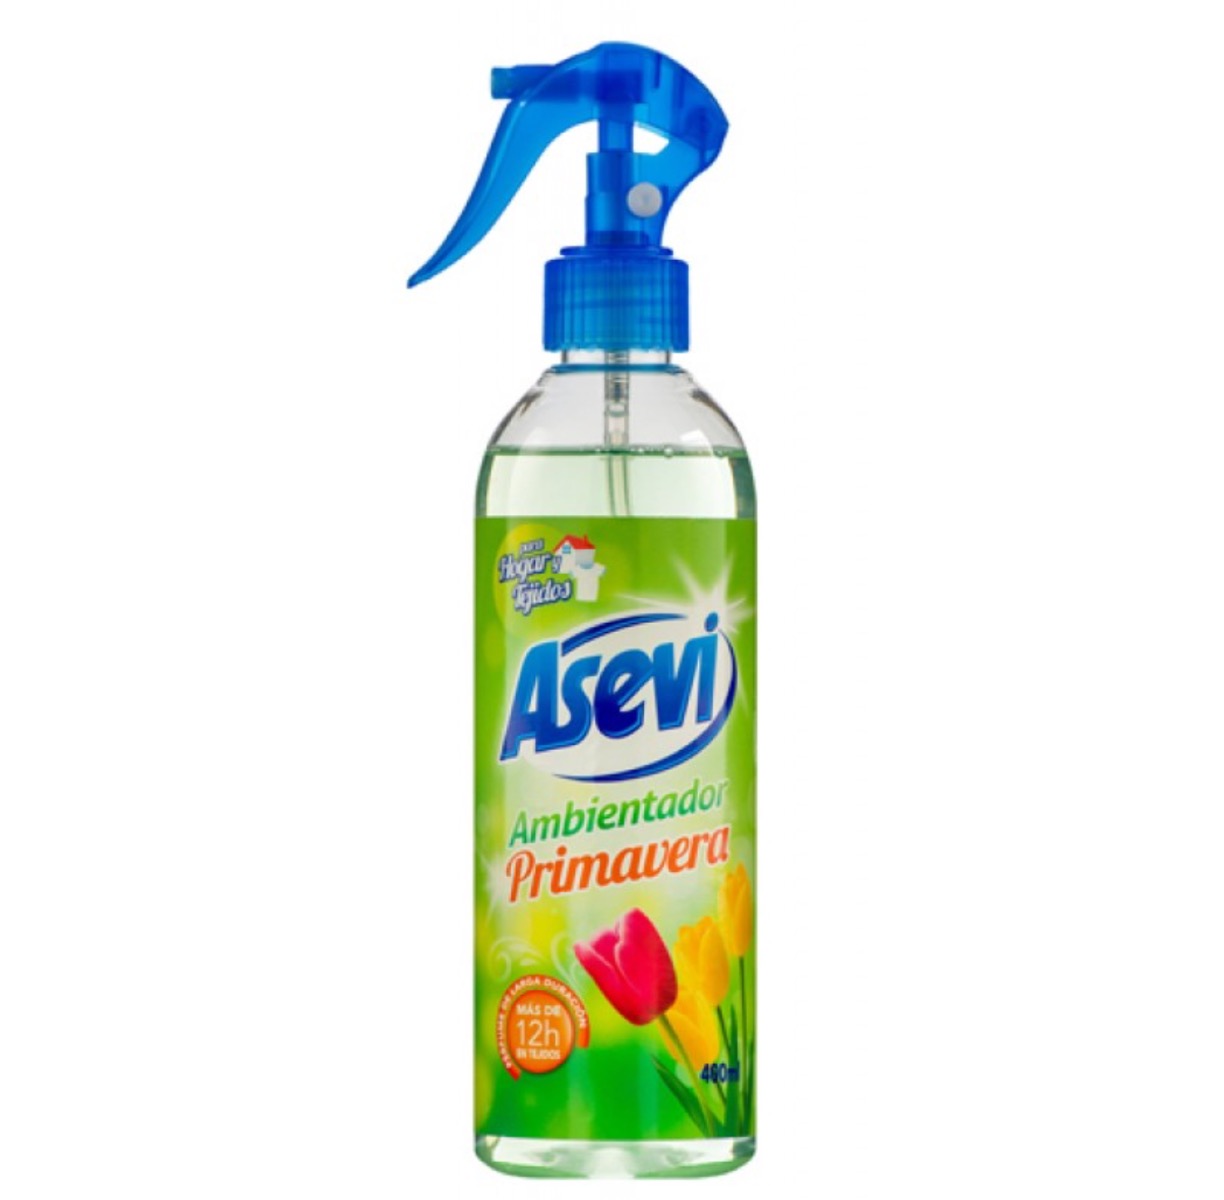 Asevi Primavera Air & Fabric Freshener